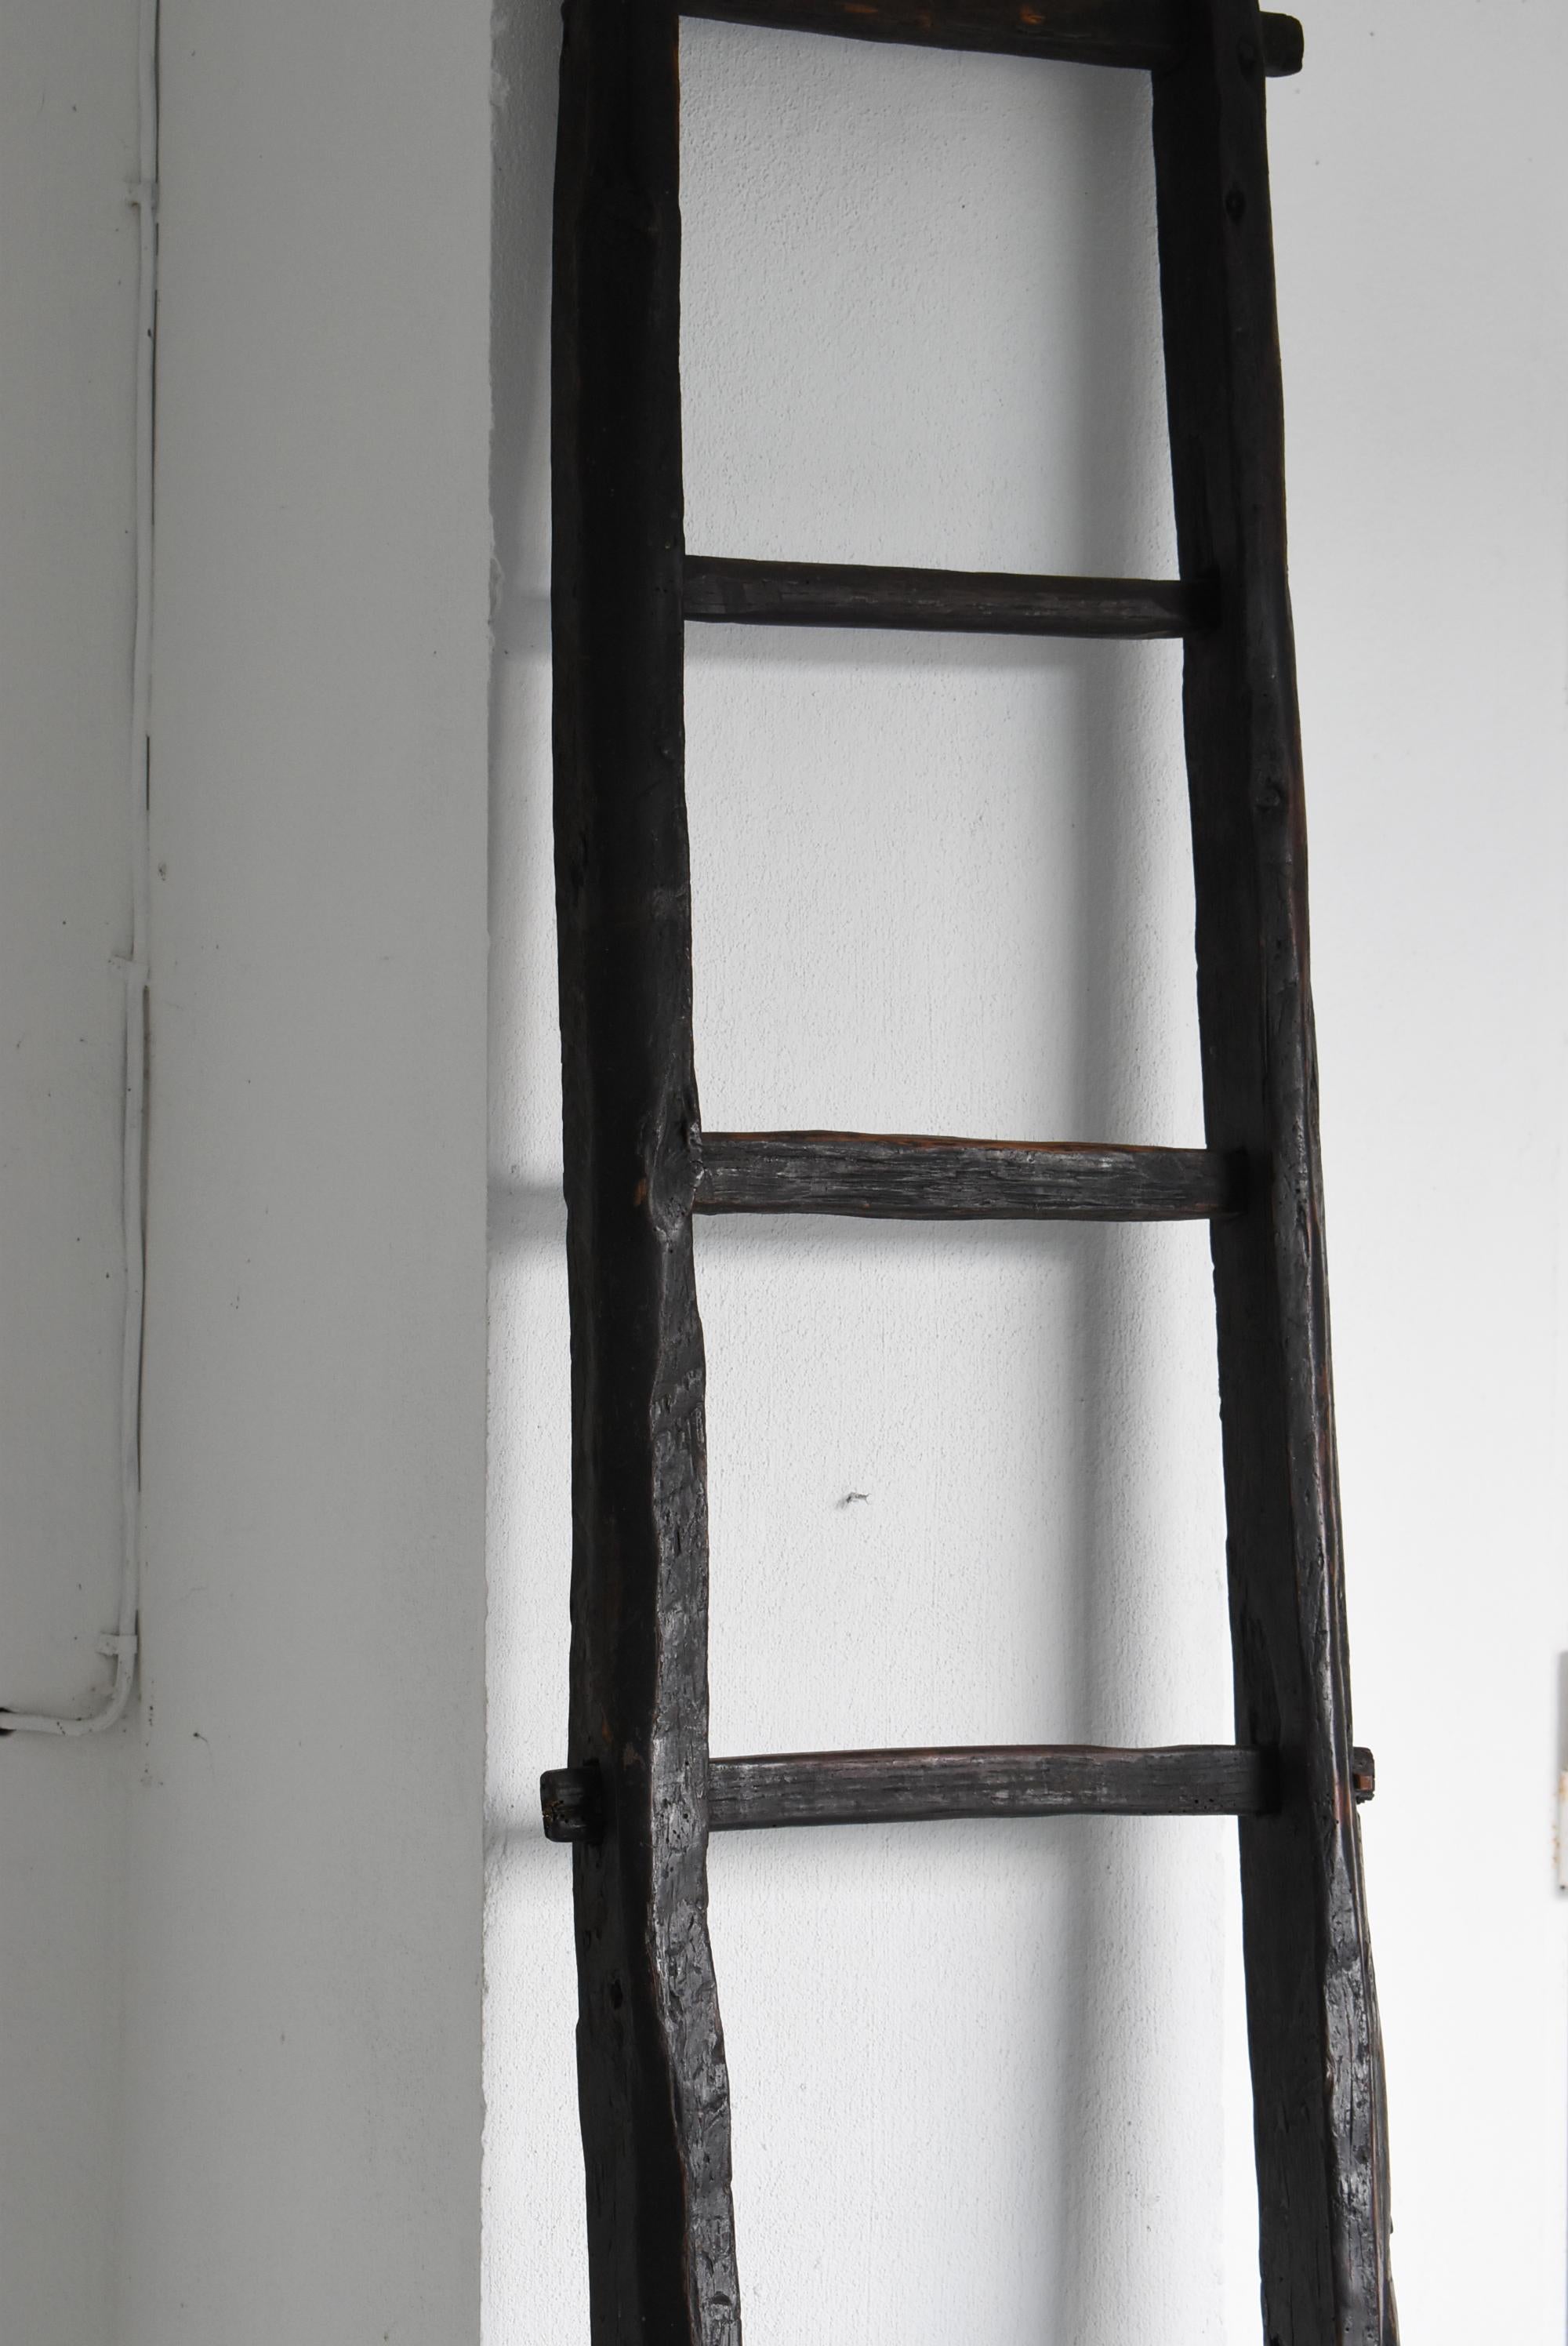 Edo Japanese Antique Wooden Ladder 1800s-1860s / Wabi Sabi Primitive Mingei Object